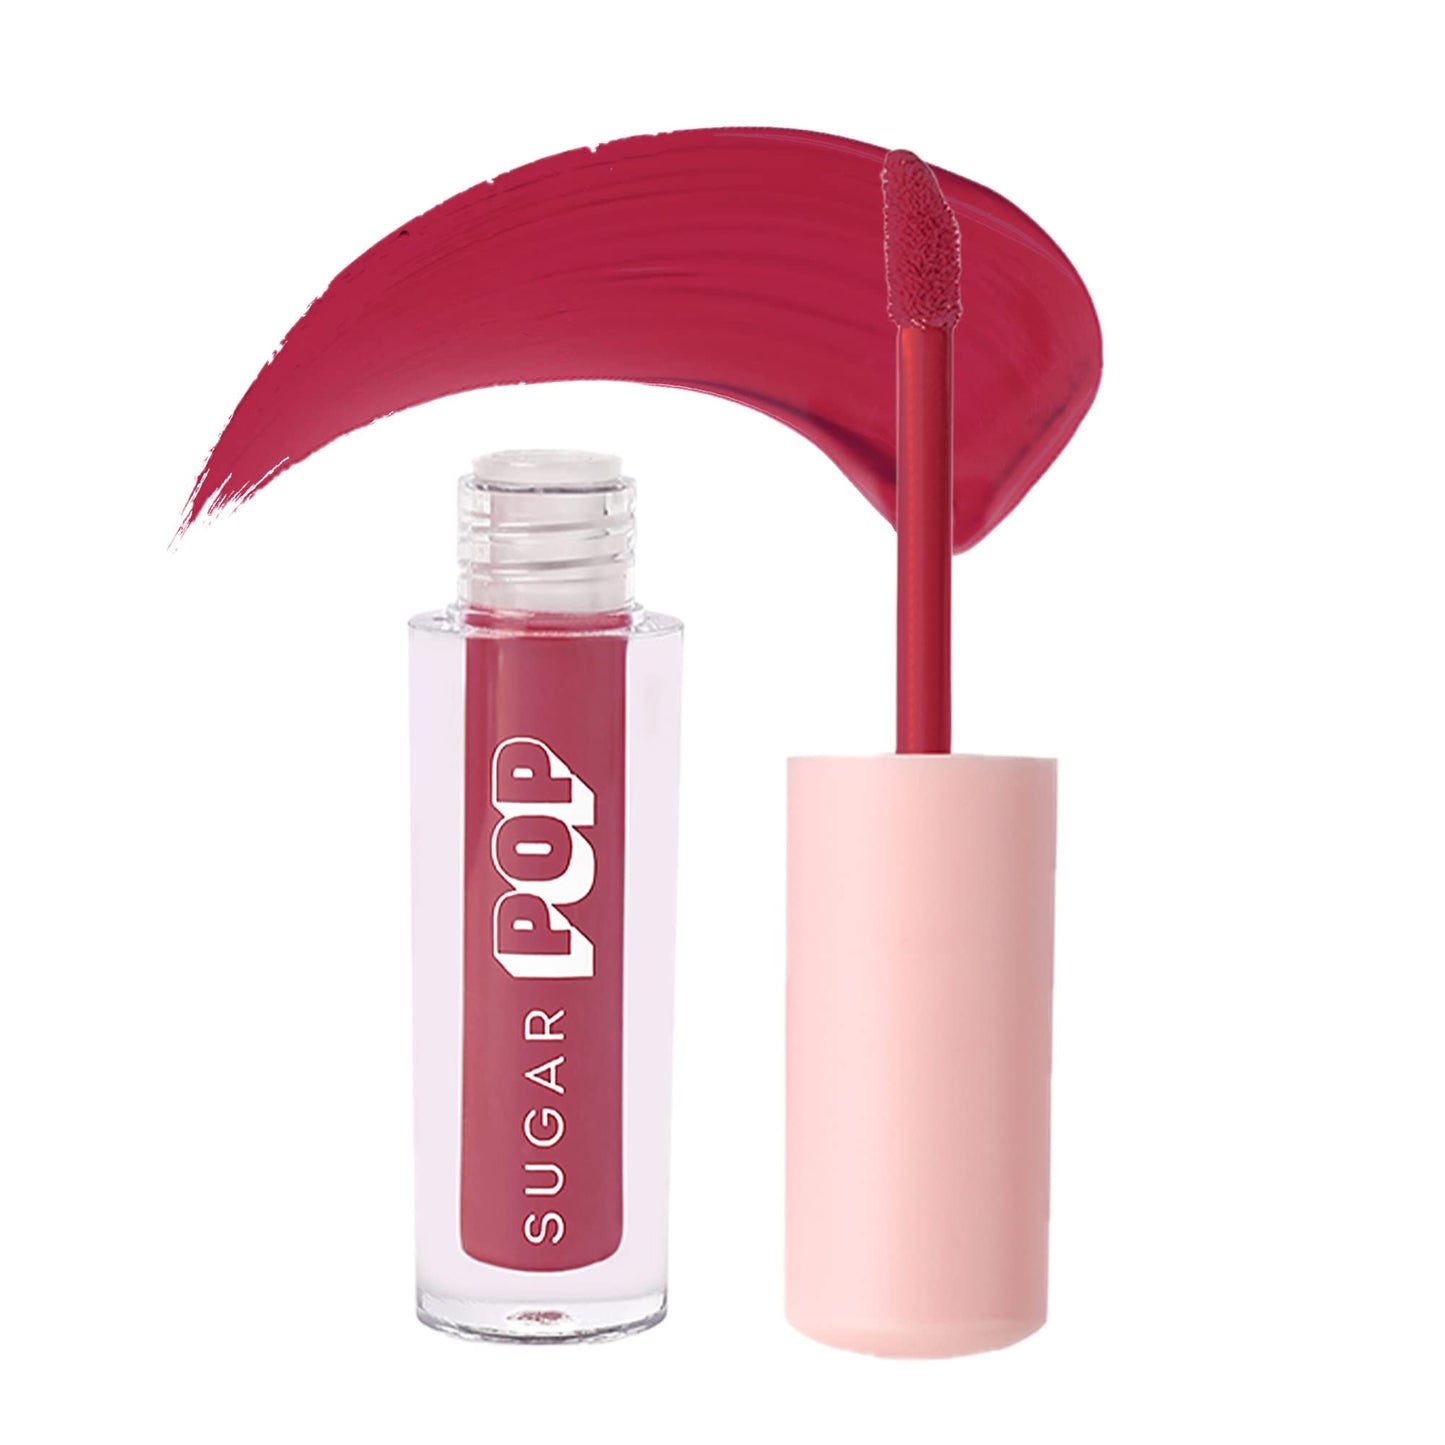 SUGAR POP Matte Lipcolour - 15 Flamingo (Pinkish Purple) – 1.6 ml | Non-Drying, Smudge Proof & SUGAR POP Matte Lipcolour - 20 Poppy (Hot Pink) – 1.6 ml - Lasts Up to 8 hours l Pink Lipstick